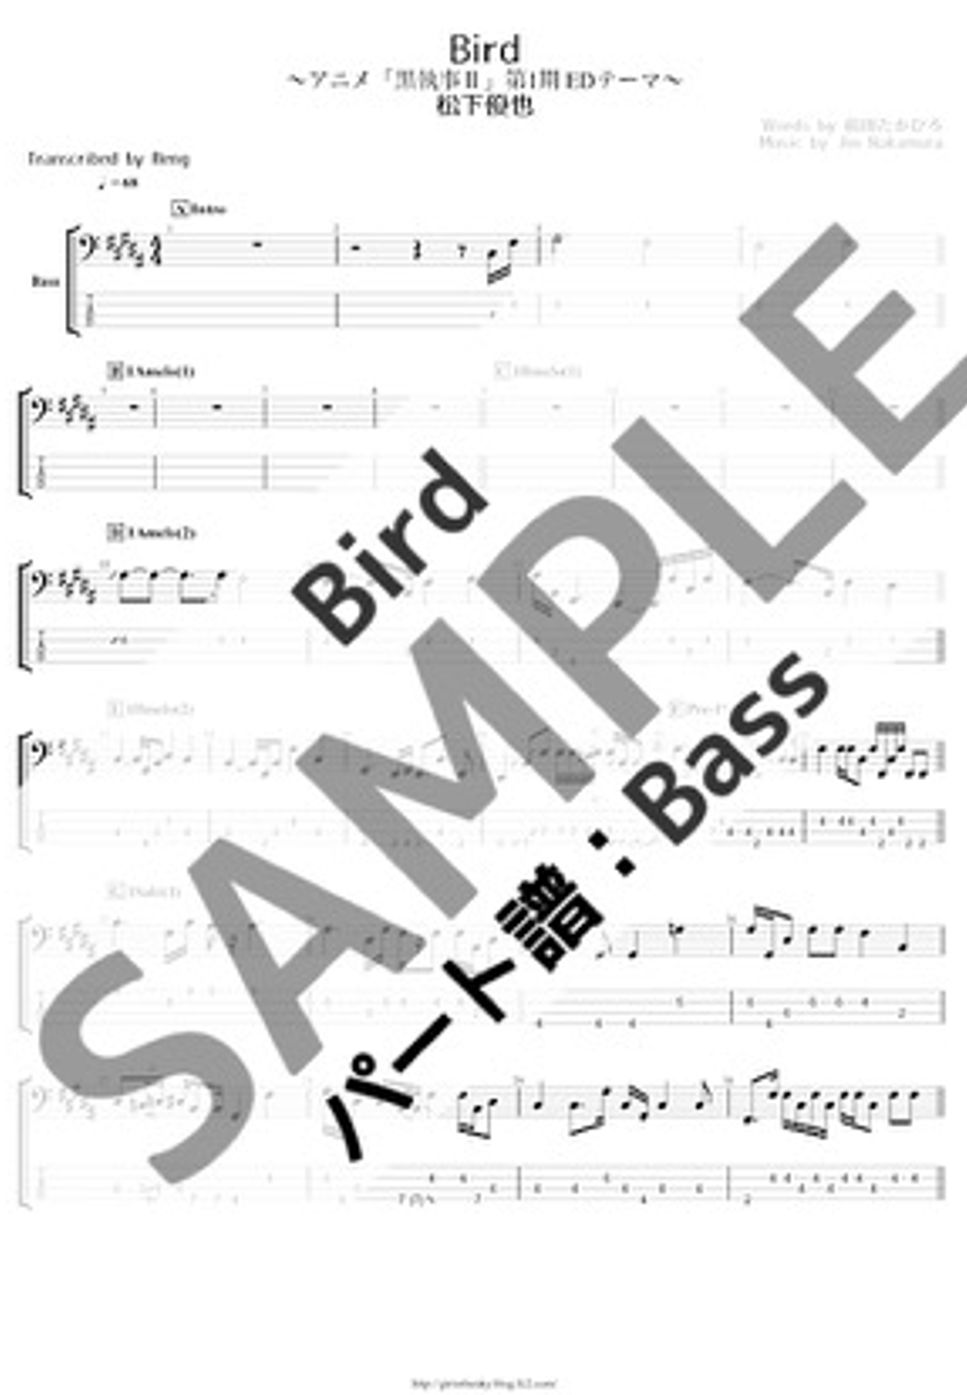 松下 優也 - Bird (Bassパート譜/TAB譜/『黒執事Ⅱ』) by Reng